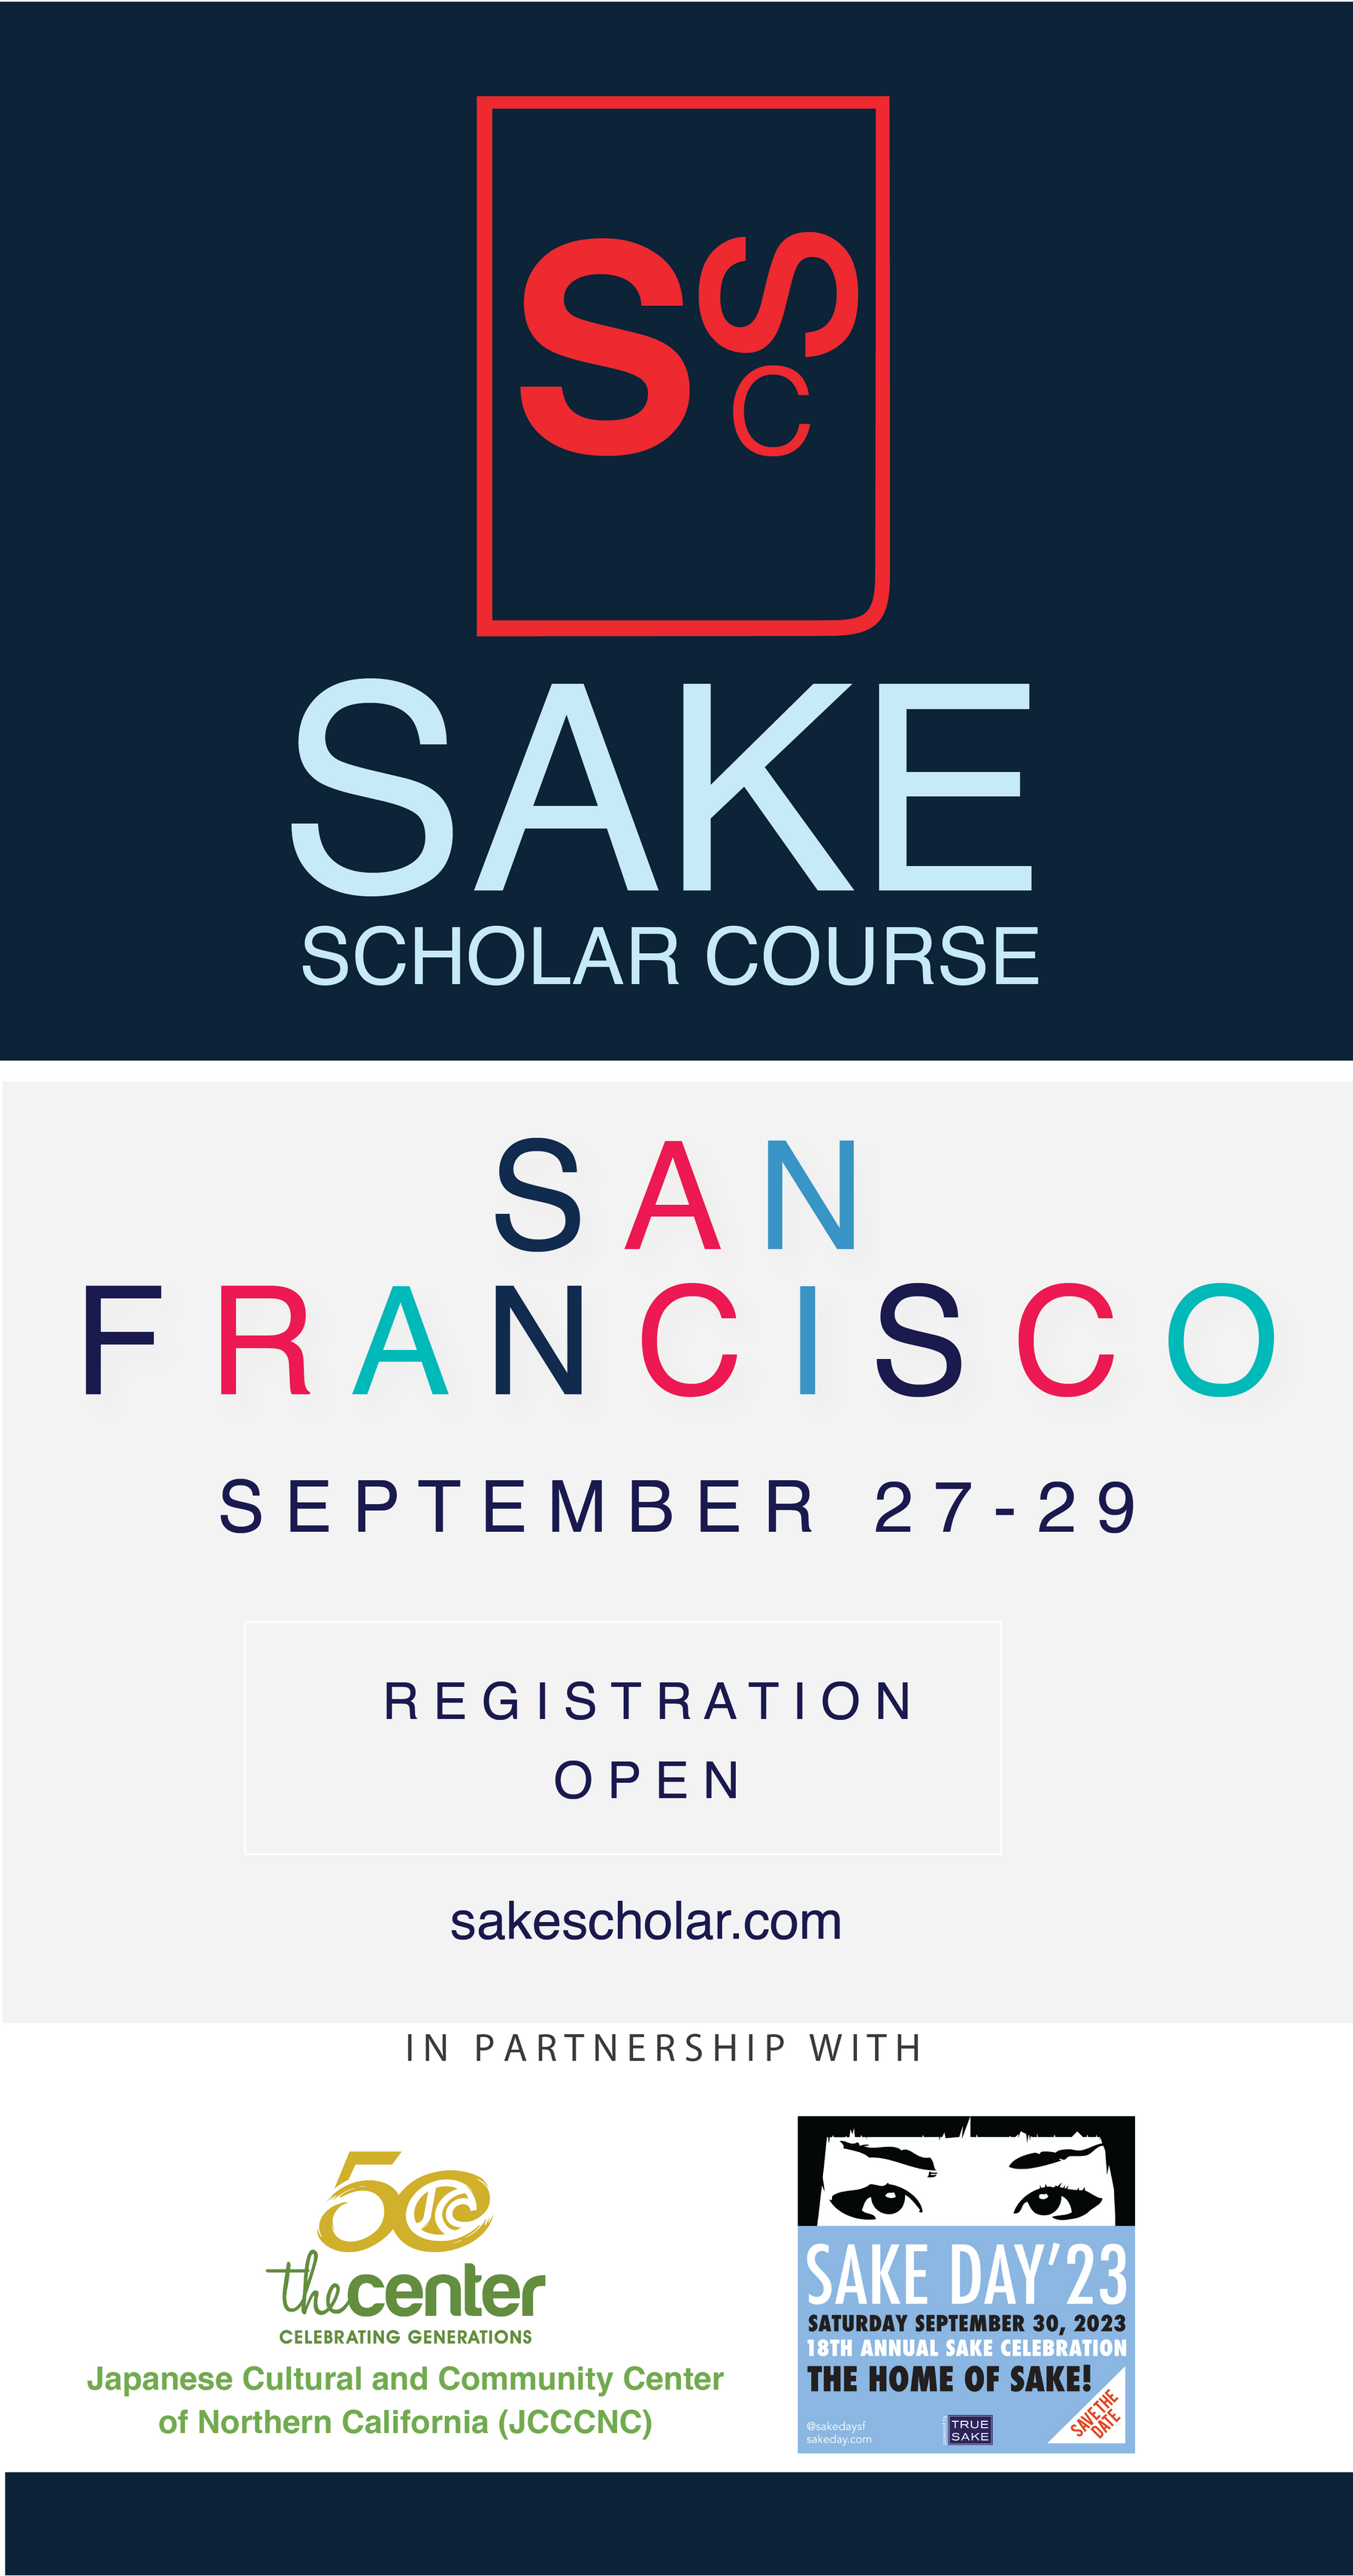 Sake Education – Michael Tremblay Brings Sake Scholar Course to SF